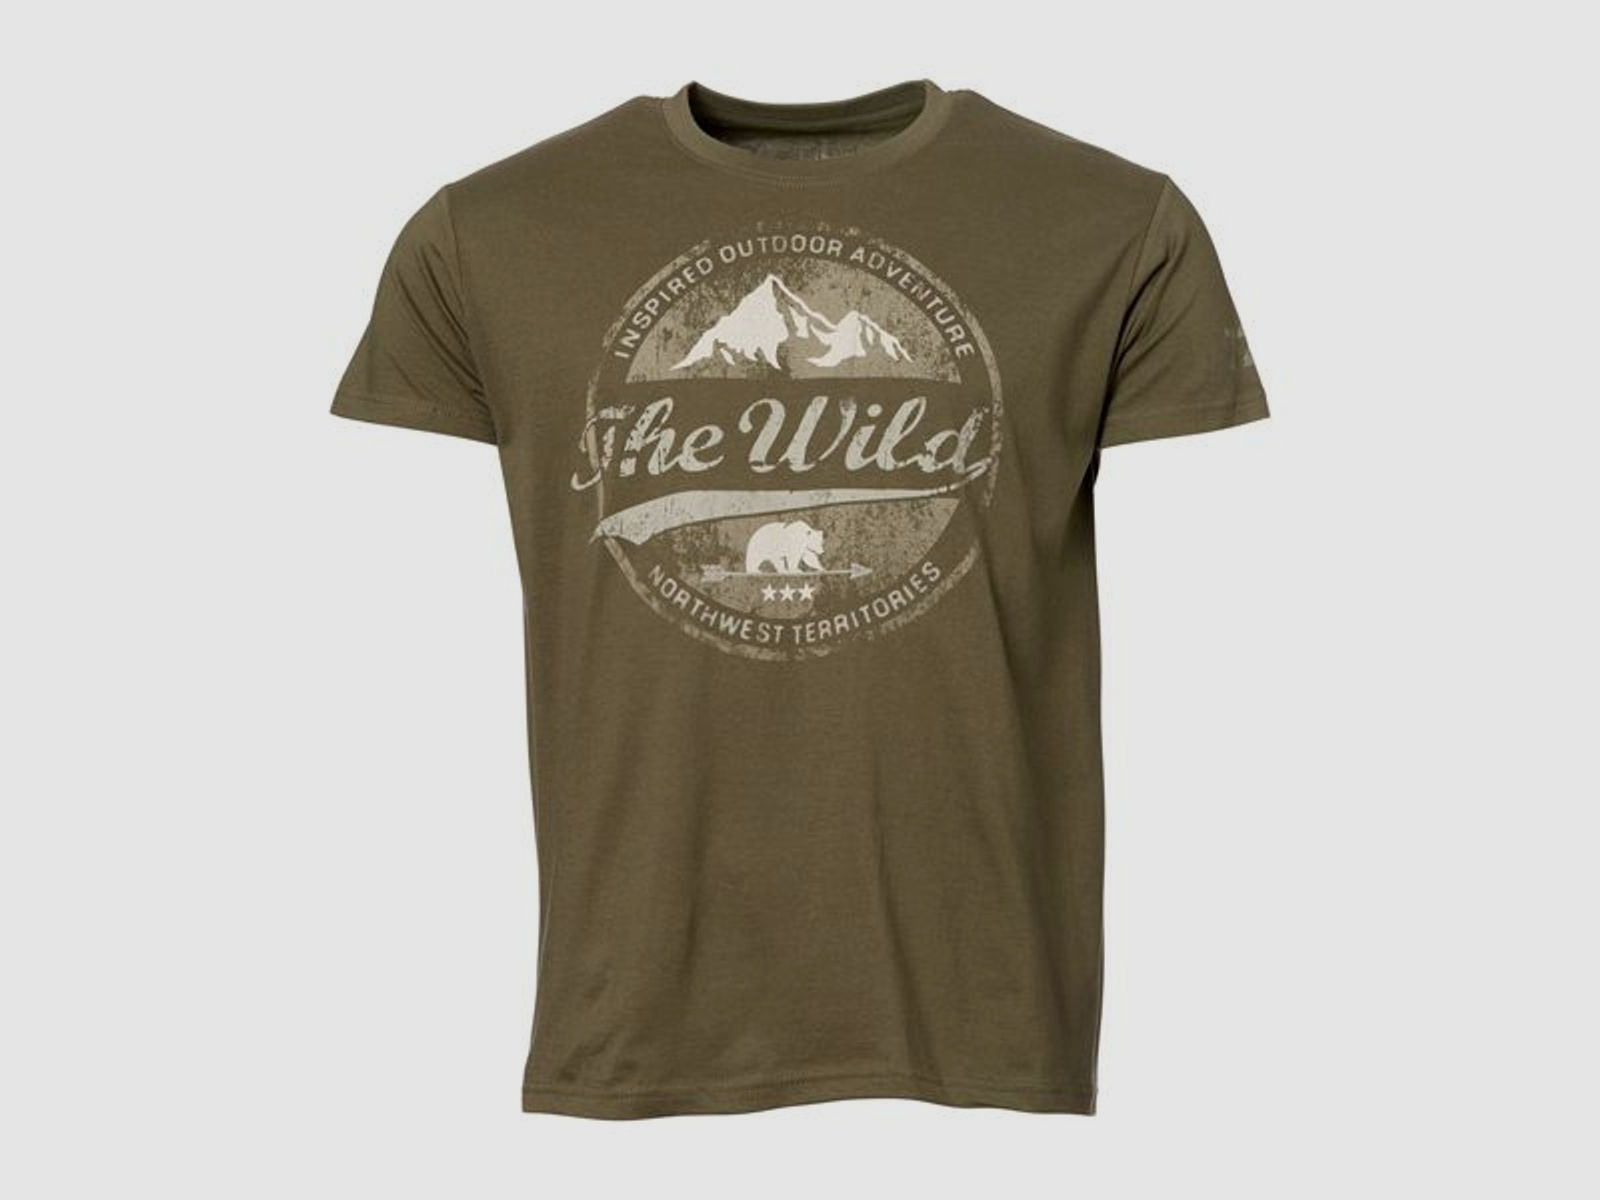 720gear 720gear T-Shirt The Wild army